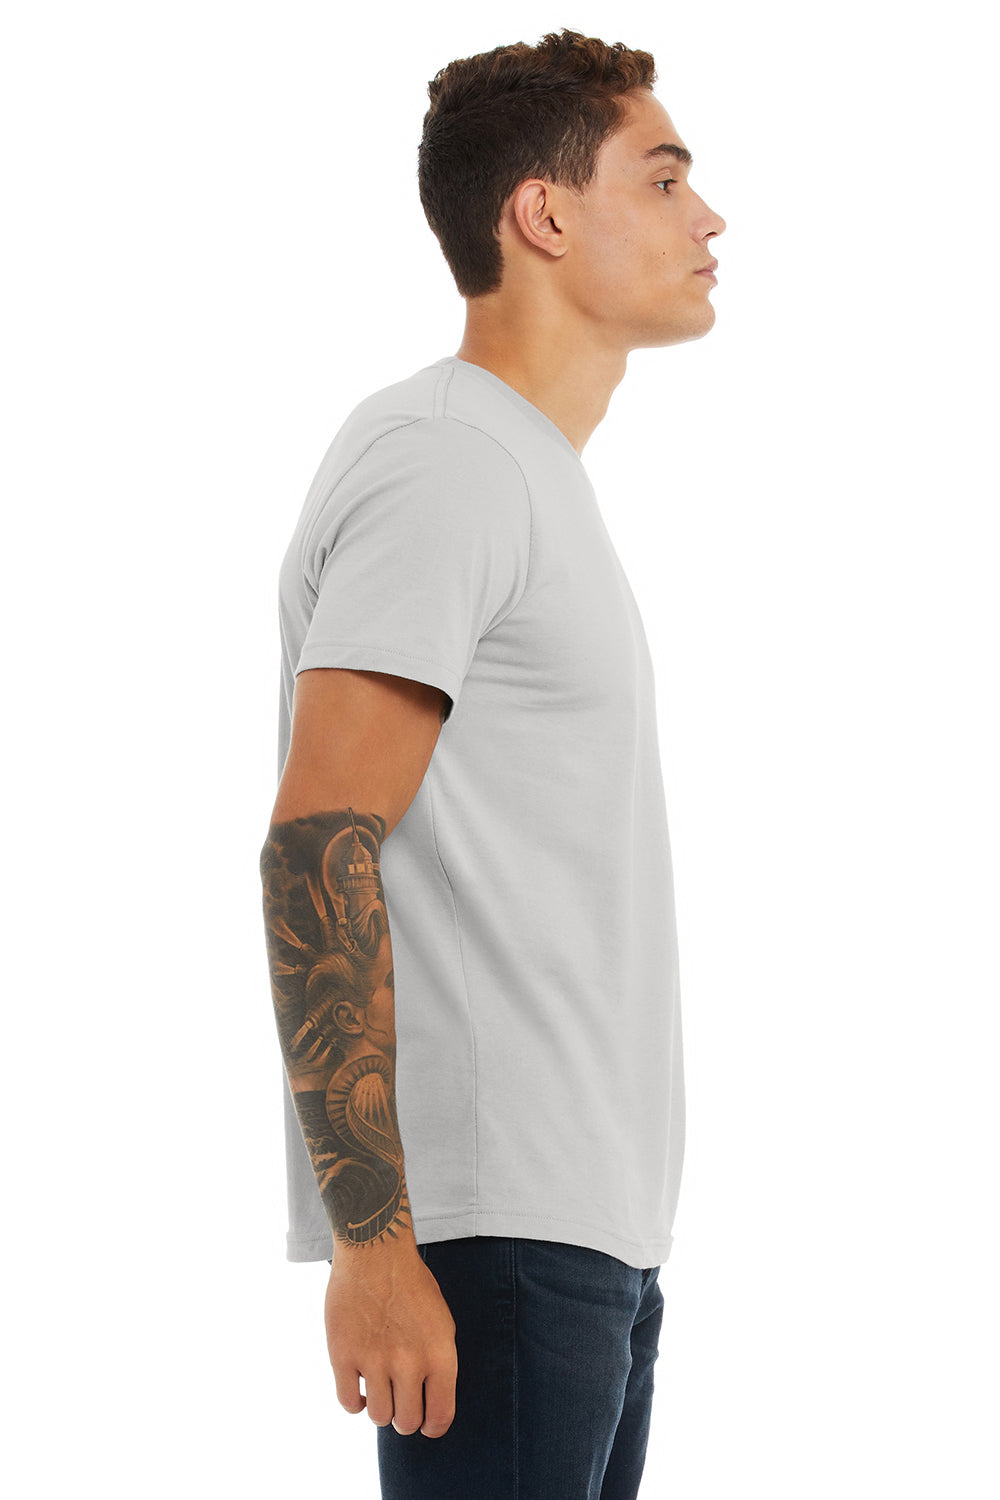 Bella + Canvas BC3001/3001C Mens Jersey Short Sleeve Crewneck T-Shirt Solid Athletic Grey Model Side